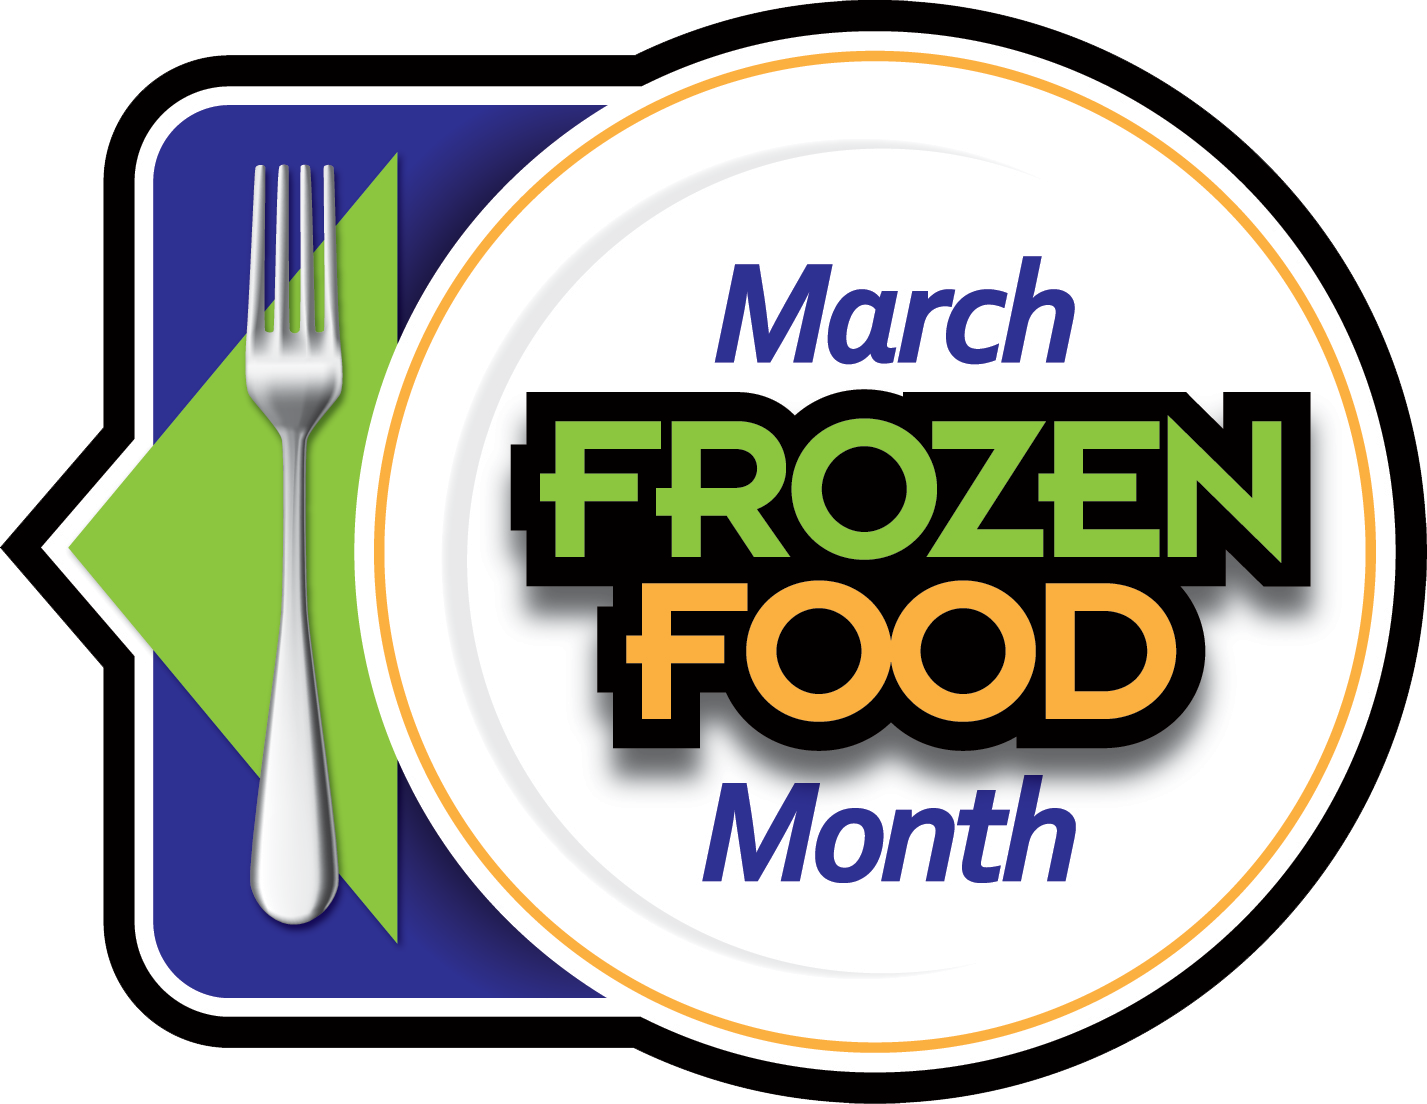 Frozen food promotions